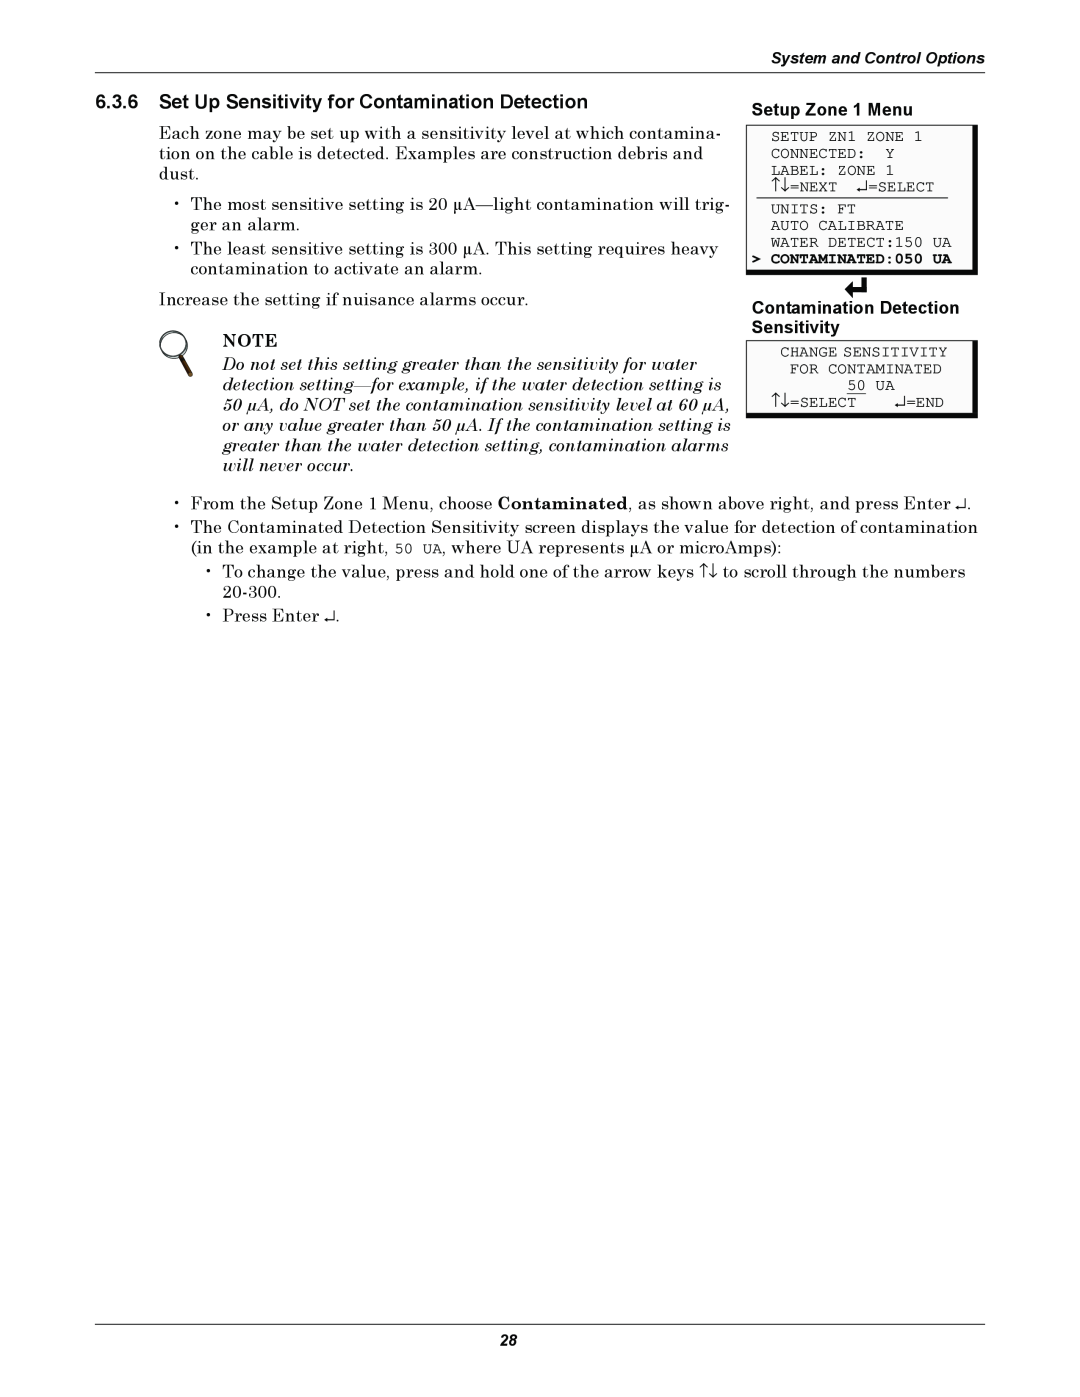 Emerson MC68HC16Z1 user manual Setup Zone 1 Menu, Contamination Detection Sensitivity 